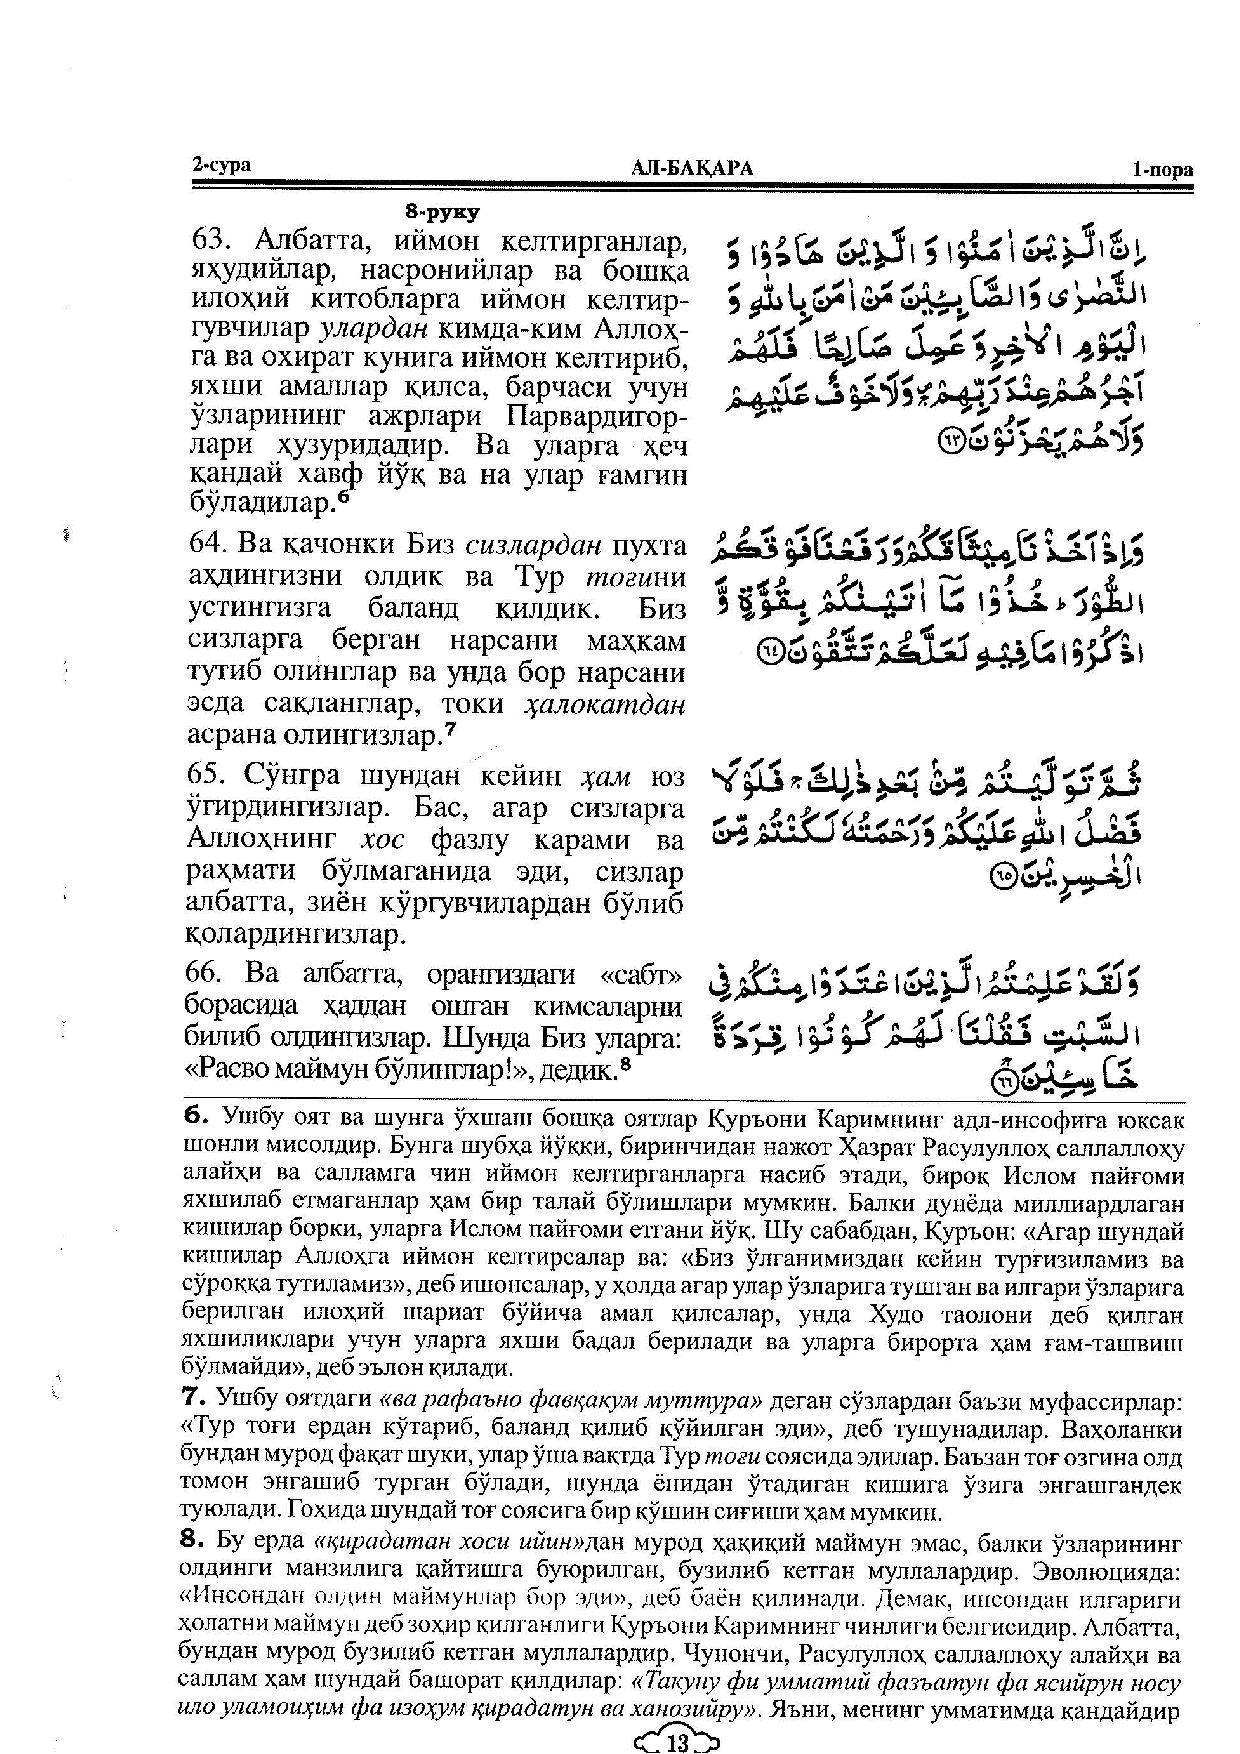 002-al-baqarah-page-011